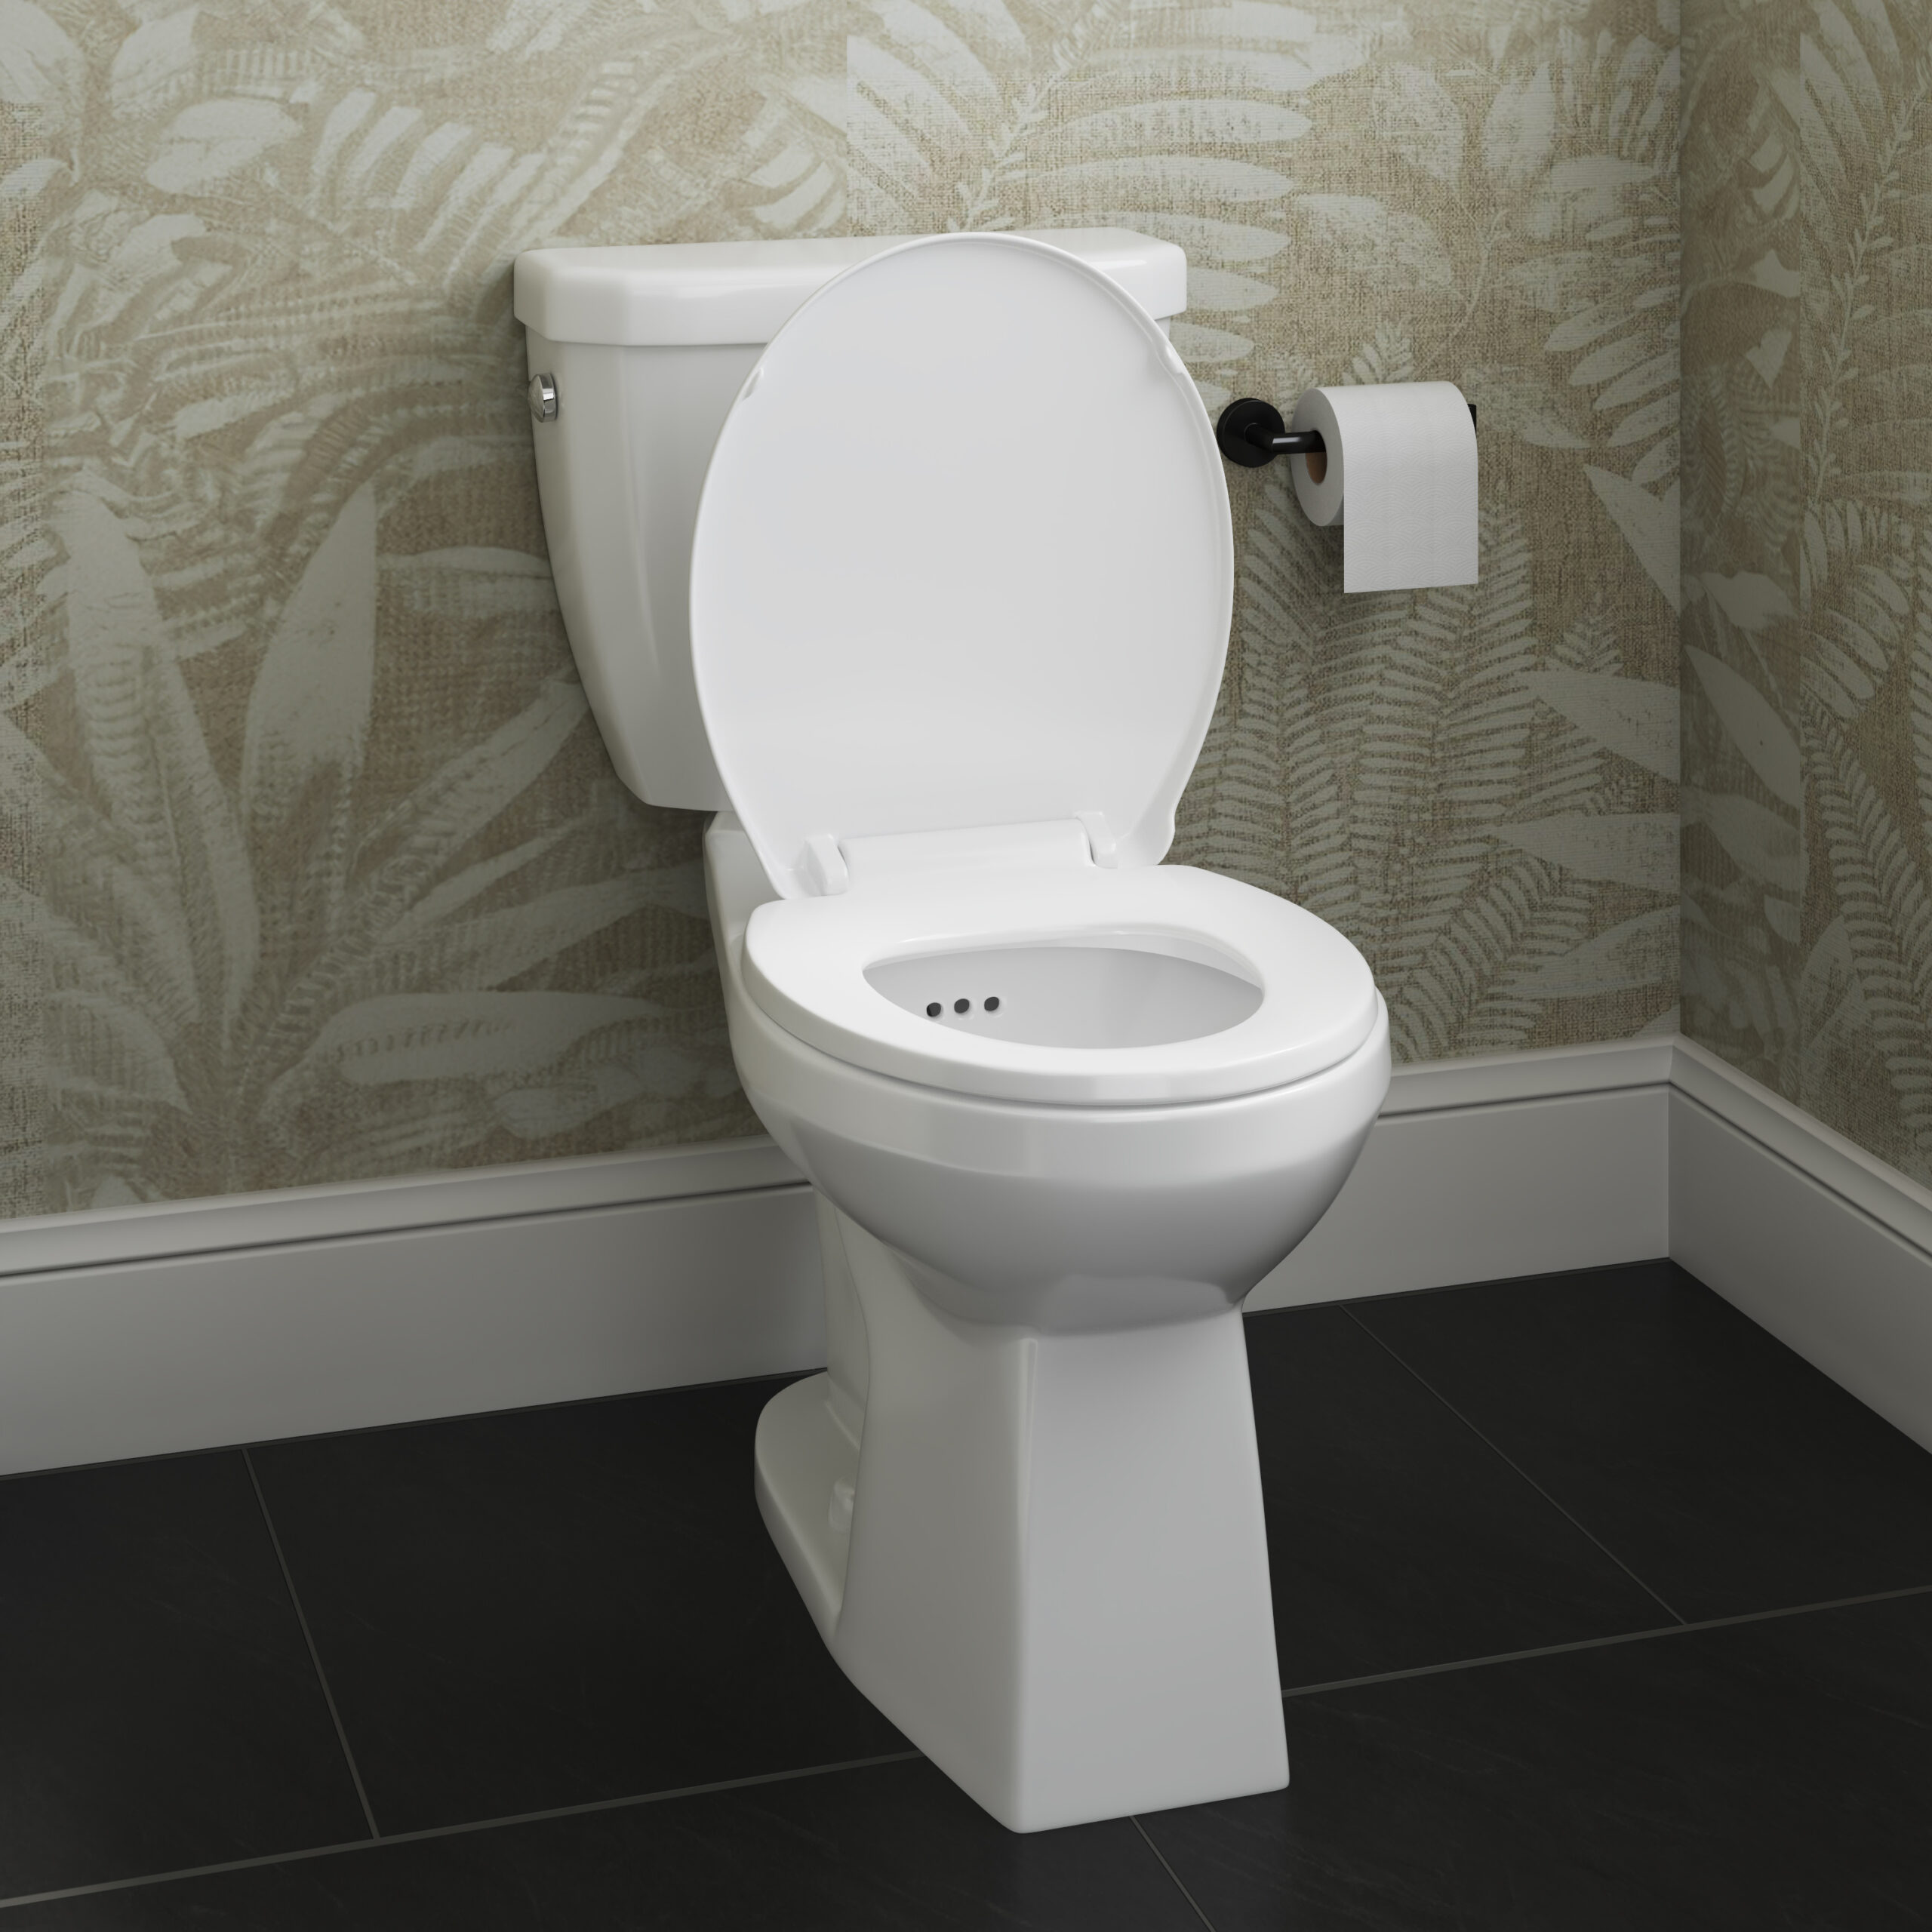 Keaton Flush Guard Toilet - 4740FGFXU - Closeup Angle View Room Scene